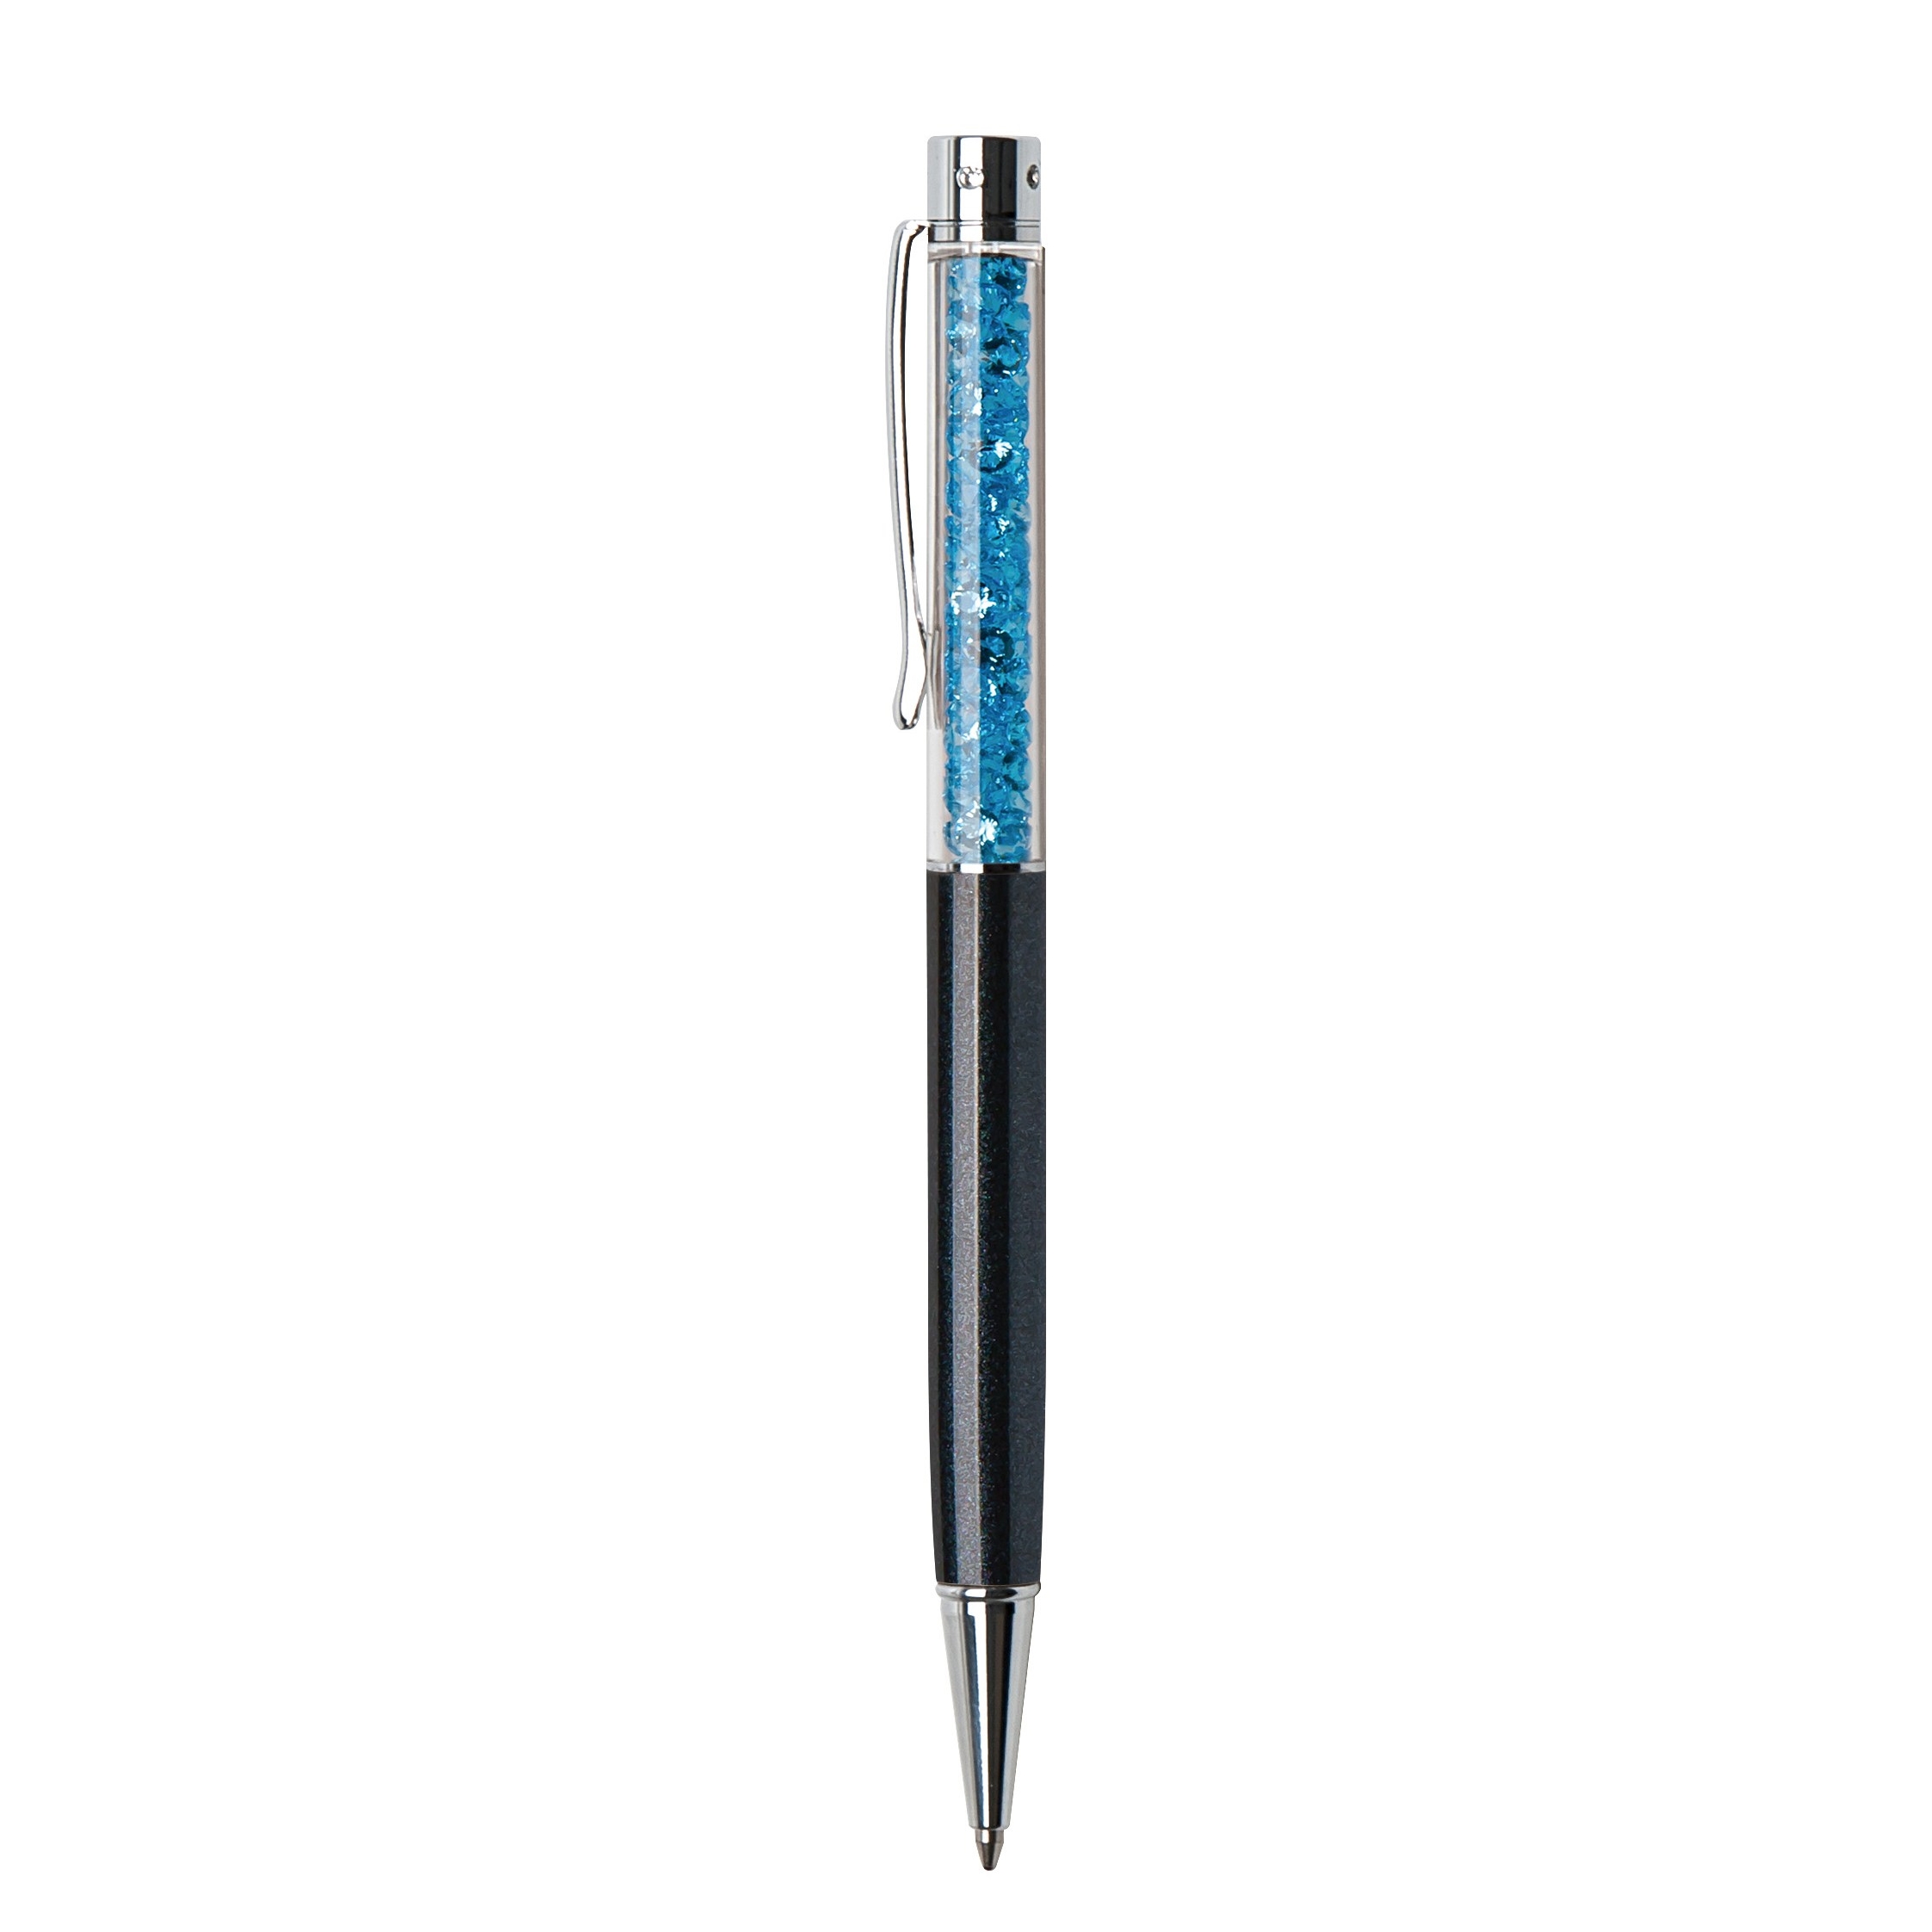 Kuličkové pero Art Crystella, Swarovski Crystals, černá, aqua modrý krystal